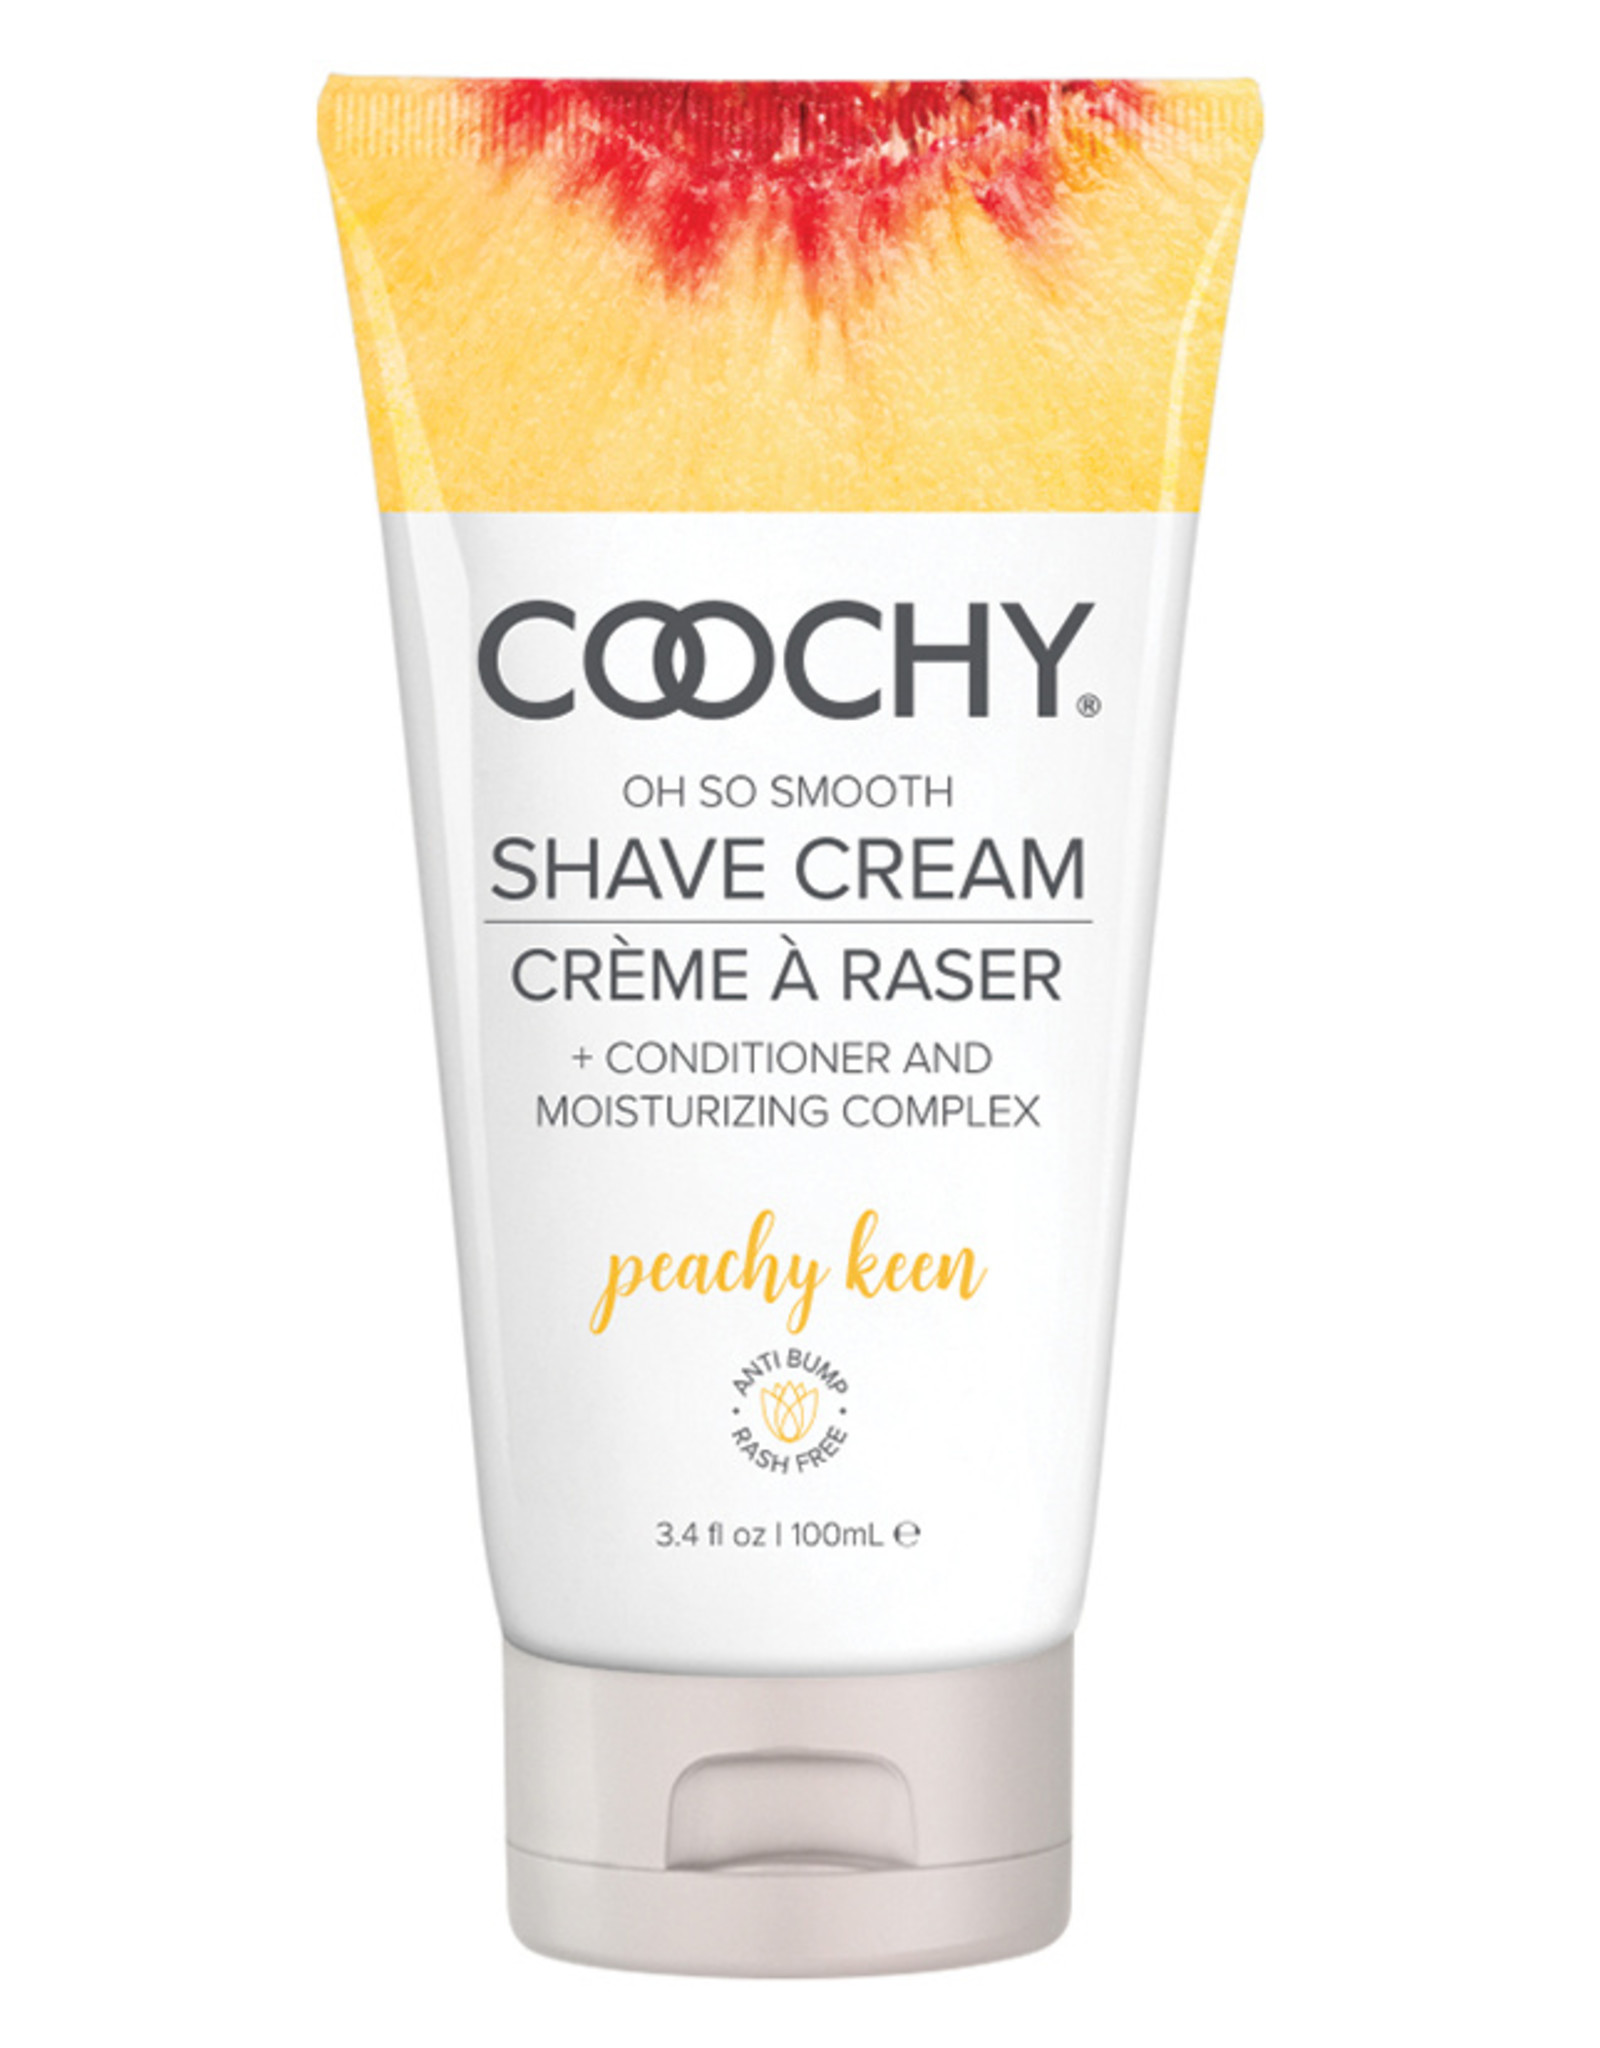 222-coochy-coochy-rash-free-shave-cream-peachy-keen.jpg